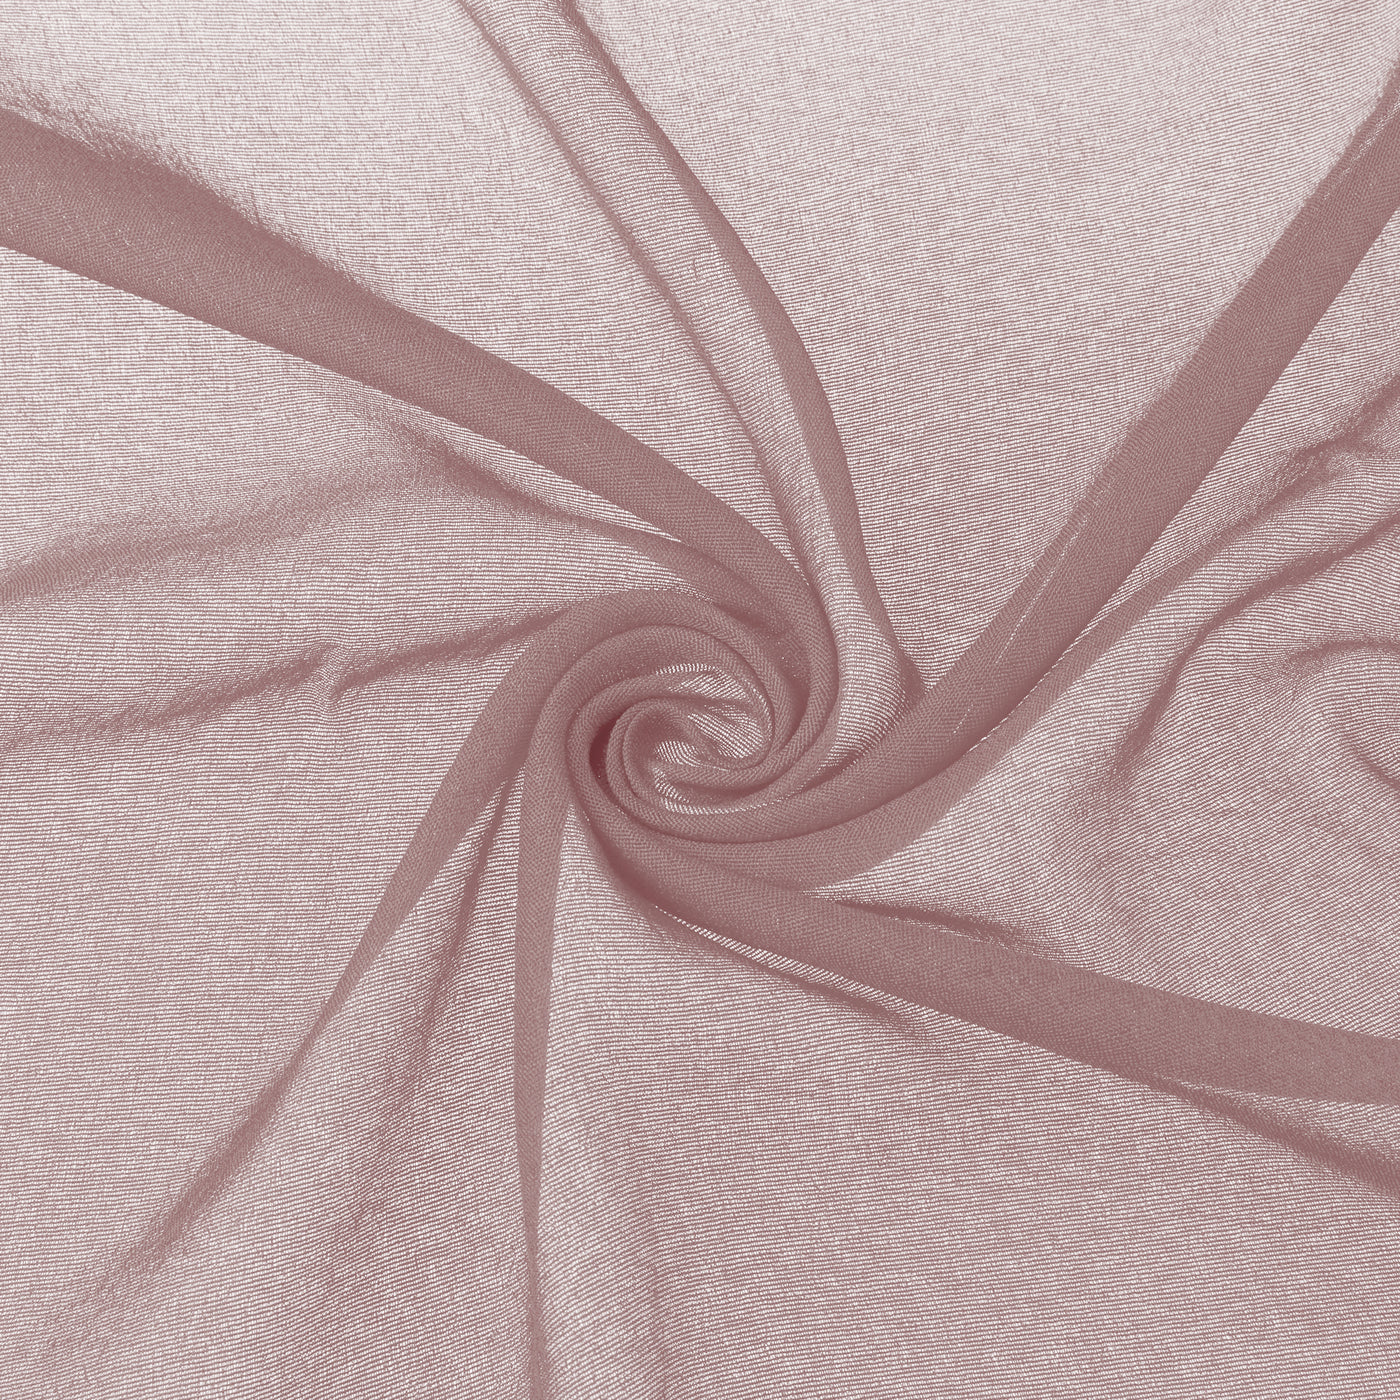 Bublédon Women's Cotton Linen Solid Scarves, Large Rhombus Wrinkle Neck Scarf Beach Gauze Wrap Shawl